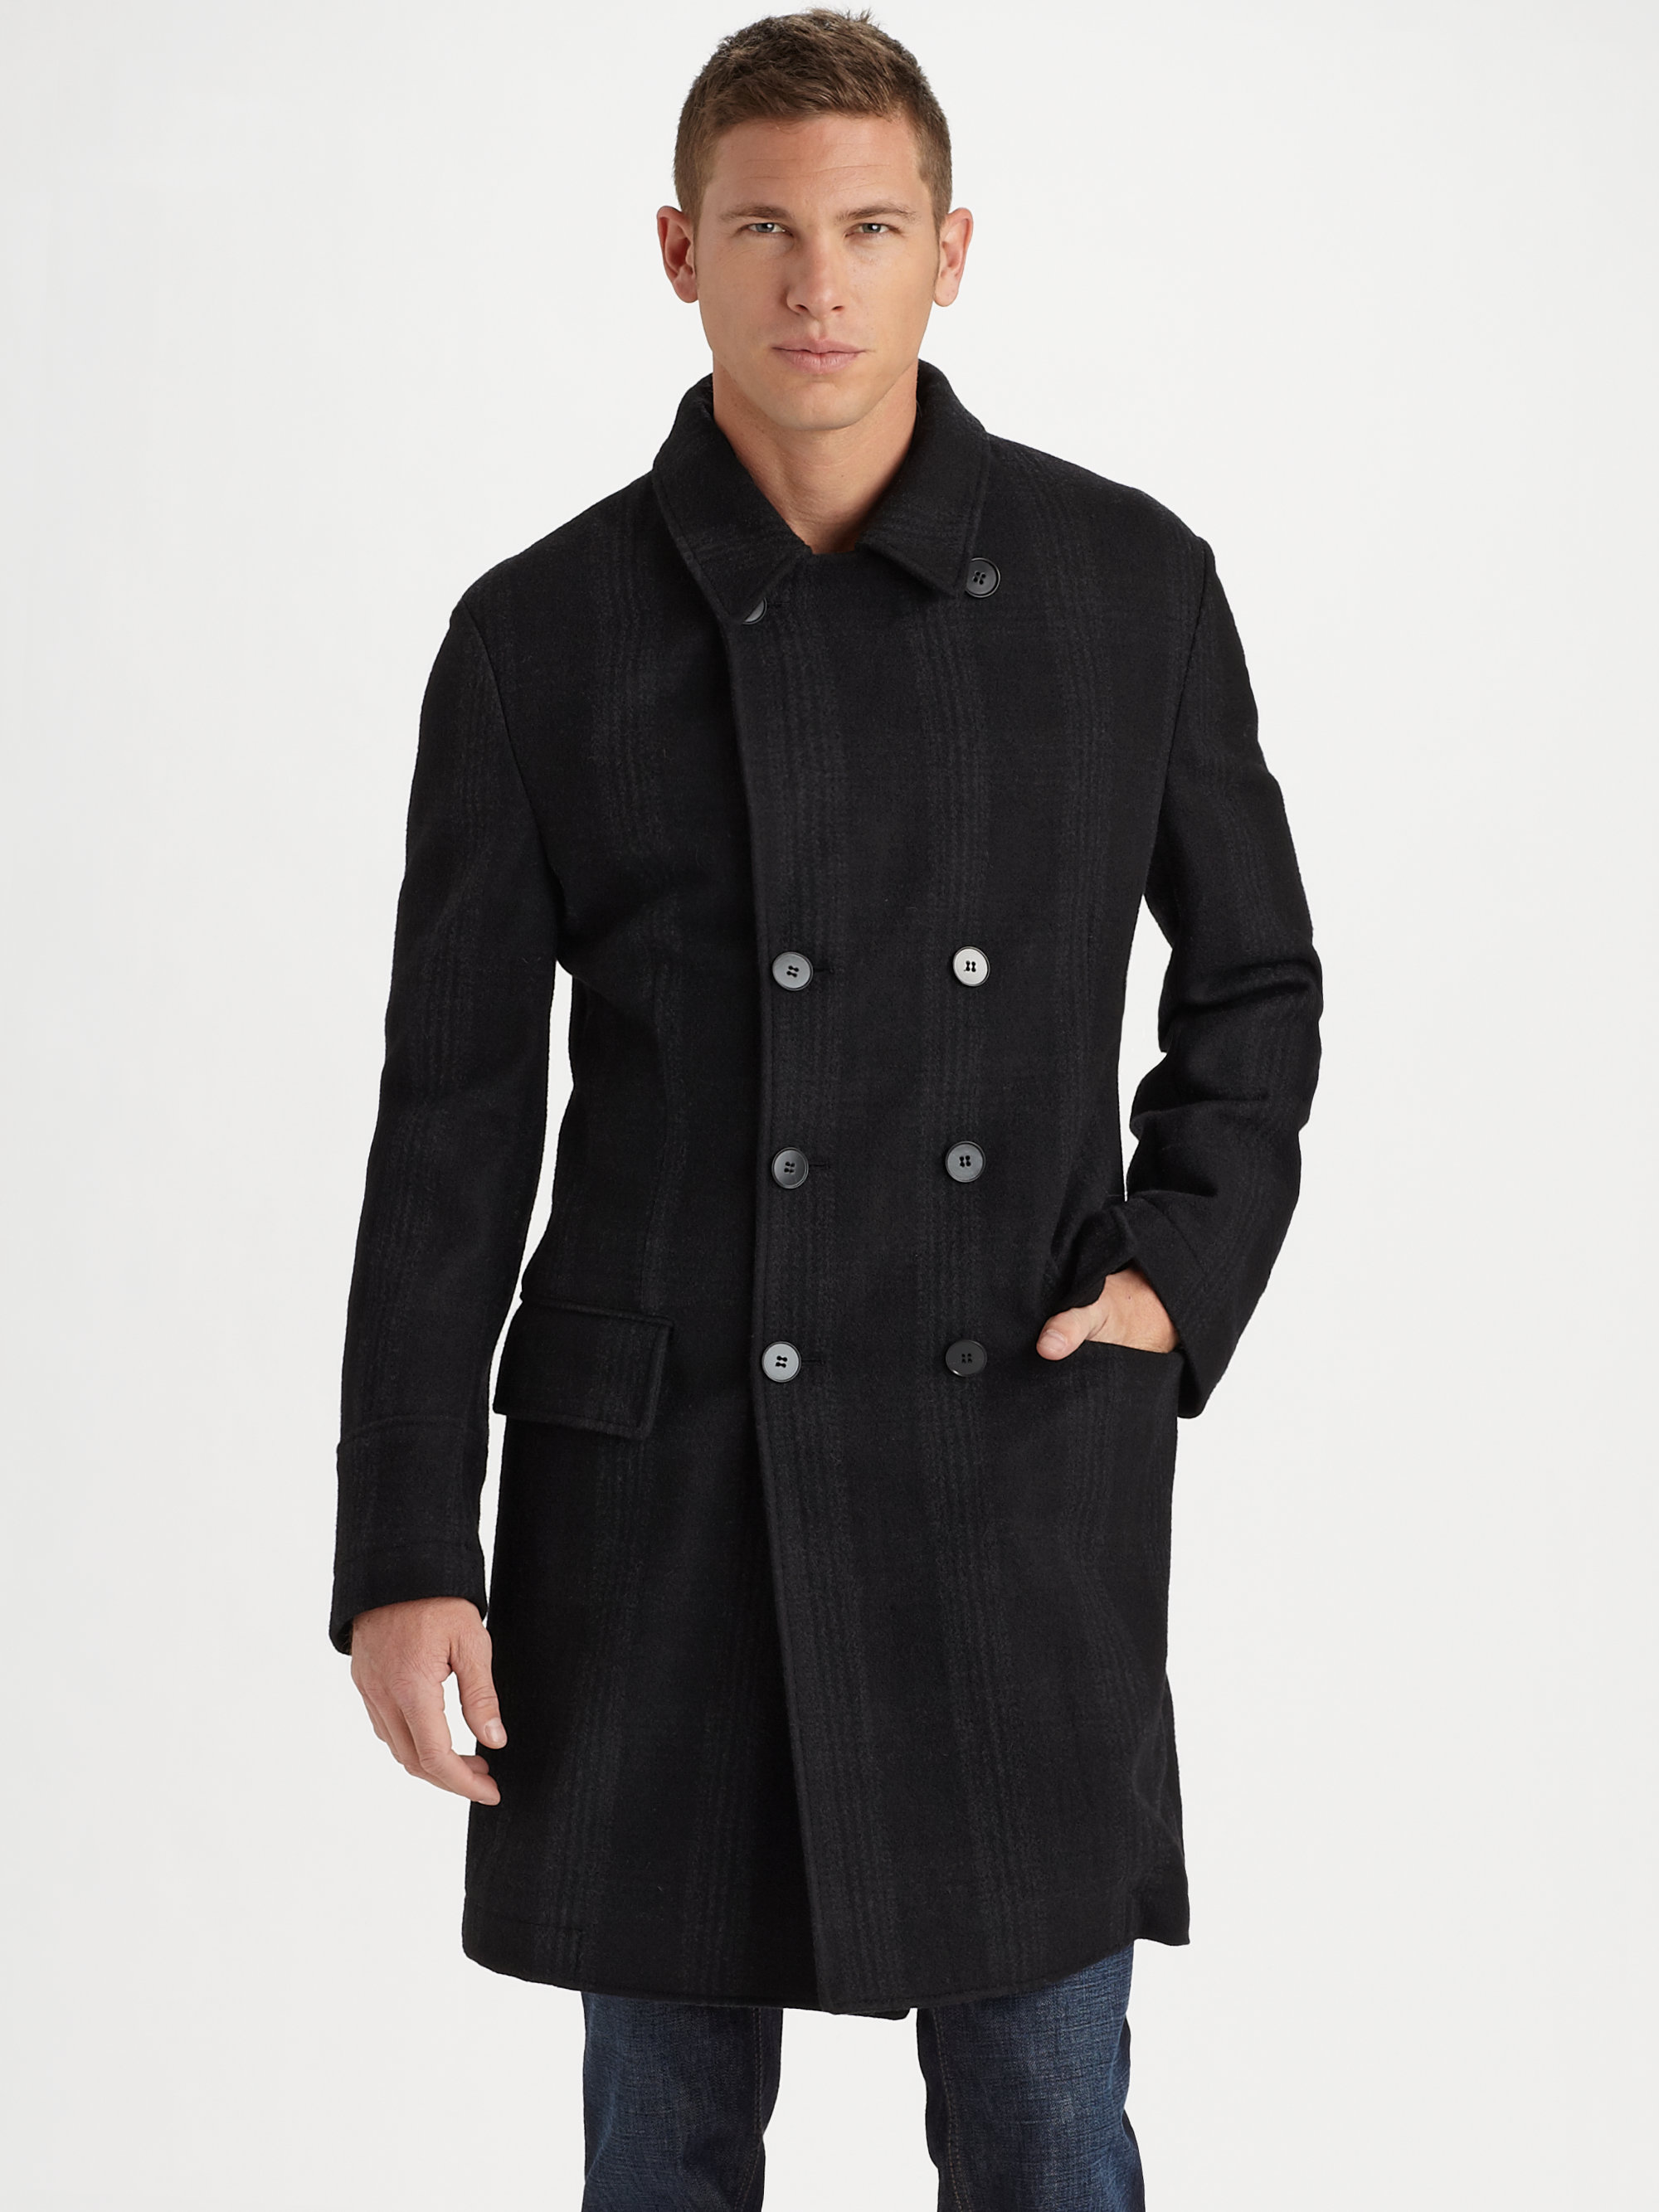 Dolce & Gabbana Doublebreasted Wool Coat in Black for Men | Lyst